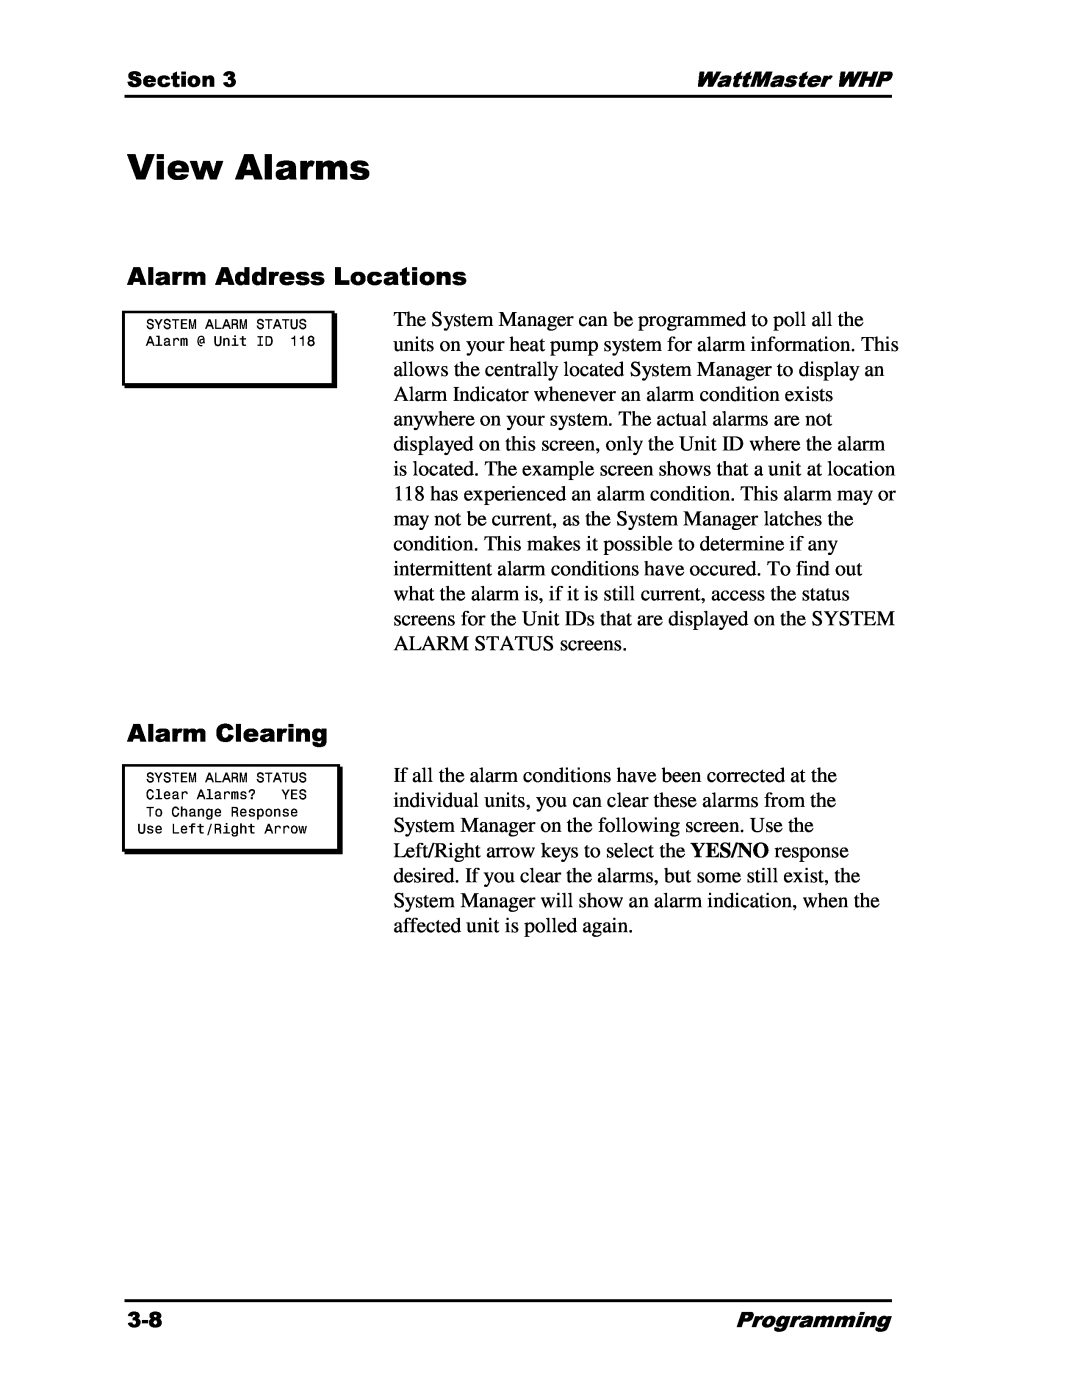 Heat Controller Water Source Heat Pump manual View Alarms, Alarm Address Locations, Alarm Clearing, Alarm@UnitID118 